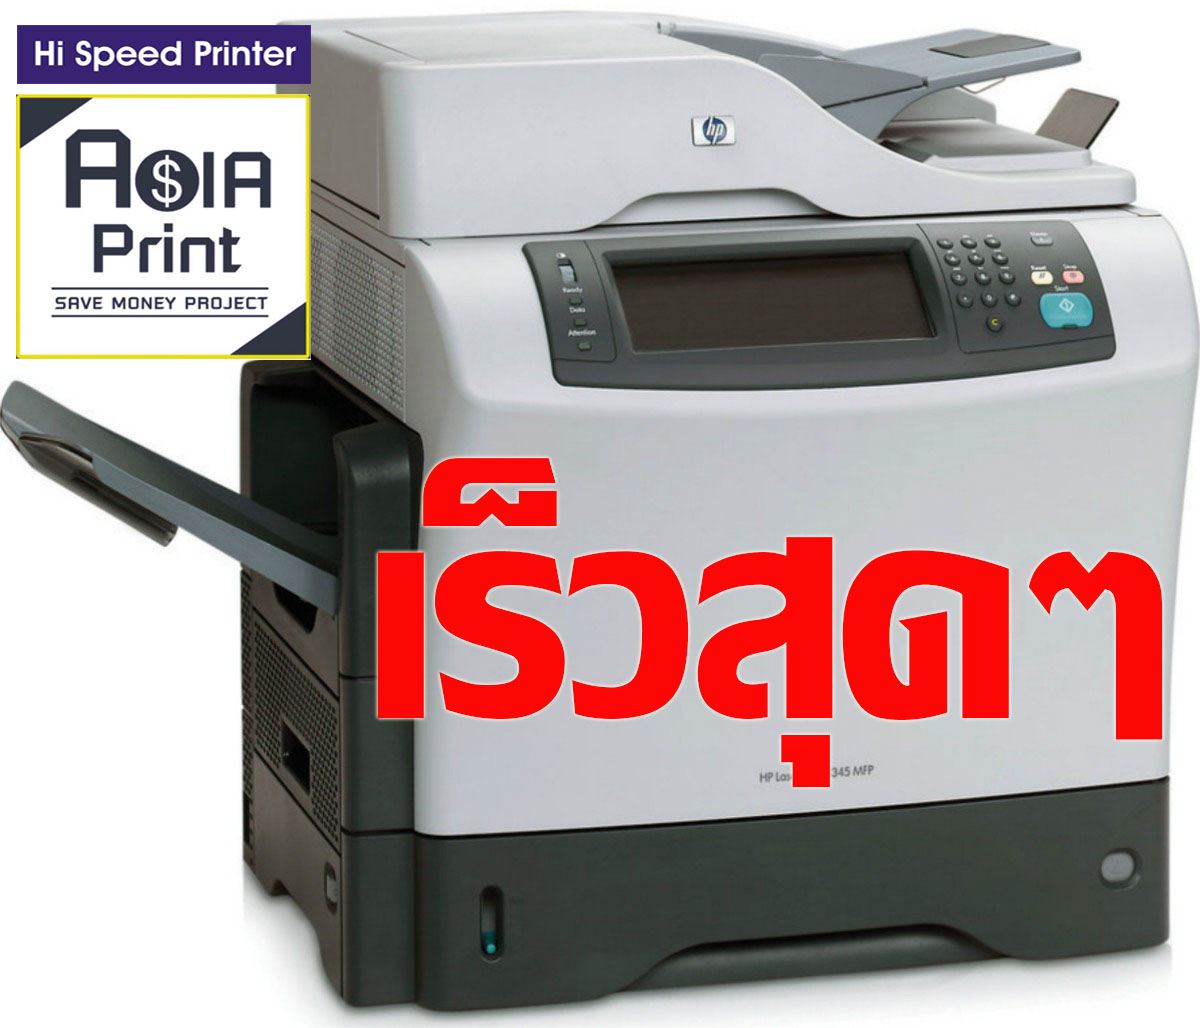 Asiaprint Save Money Project ขอเสนอ เครื่องพิมพ์มัลติฟังก์ชั่น Hp Laserjet M4345mfp print/scan/fax/copy เร็วมาก ราคาพิเศษสุดๆ สินค้ามีจำนวนจำกัด  รูปที่ 1